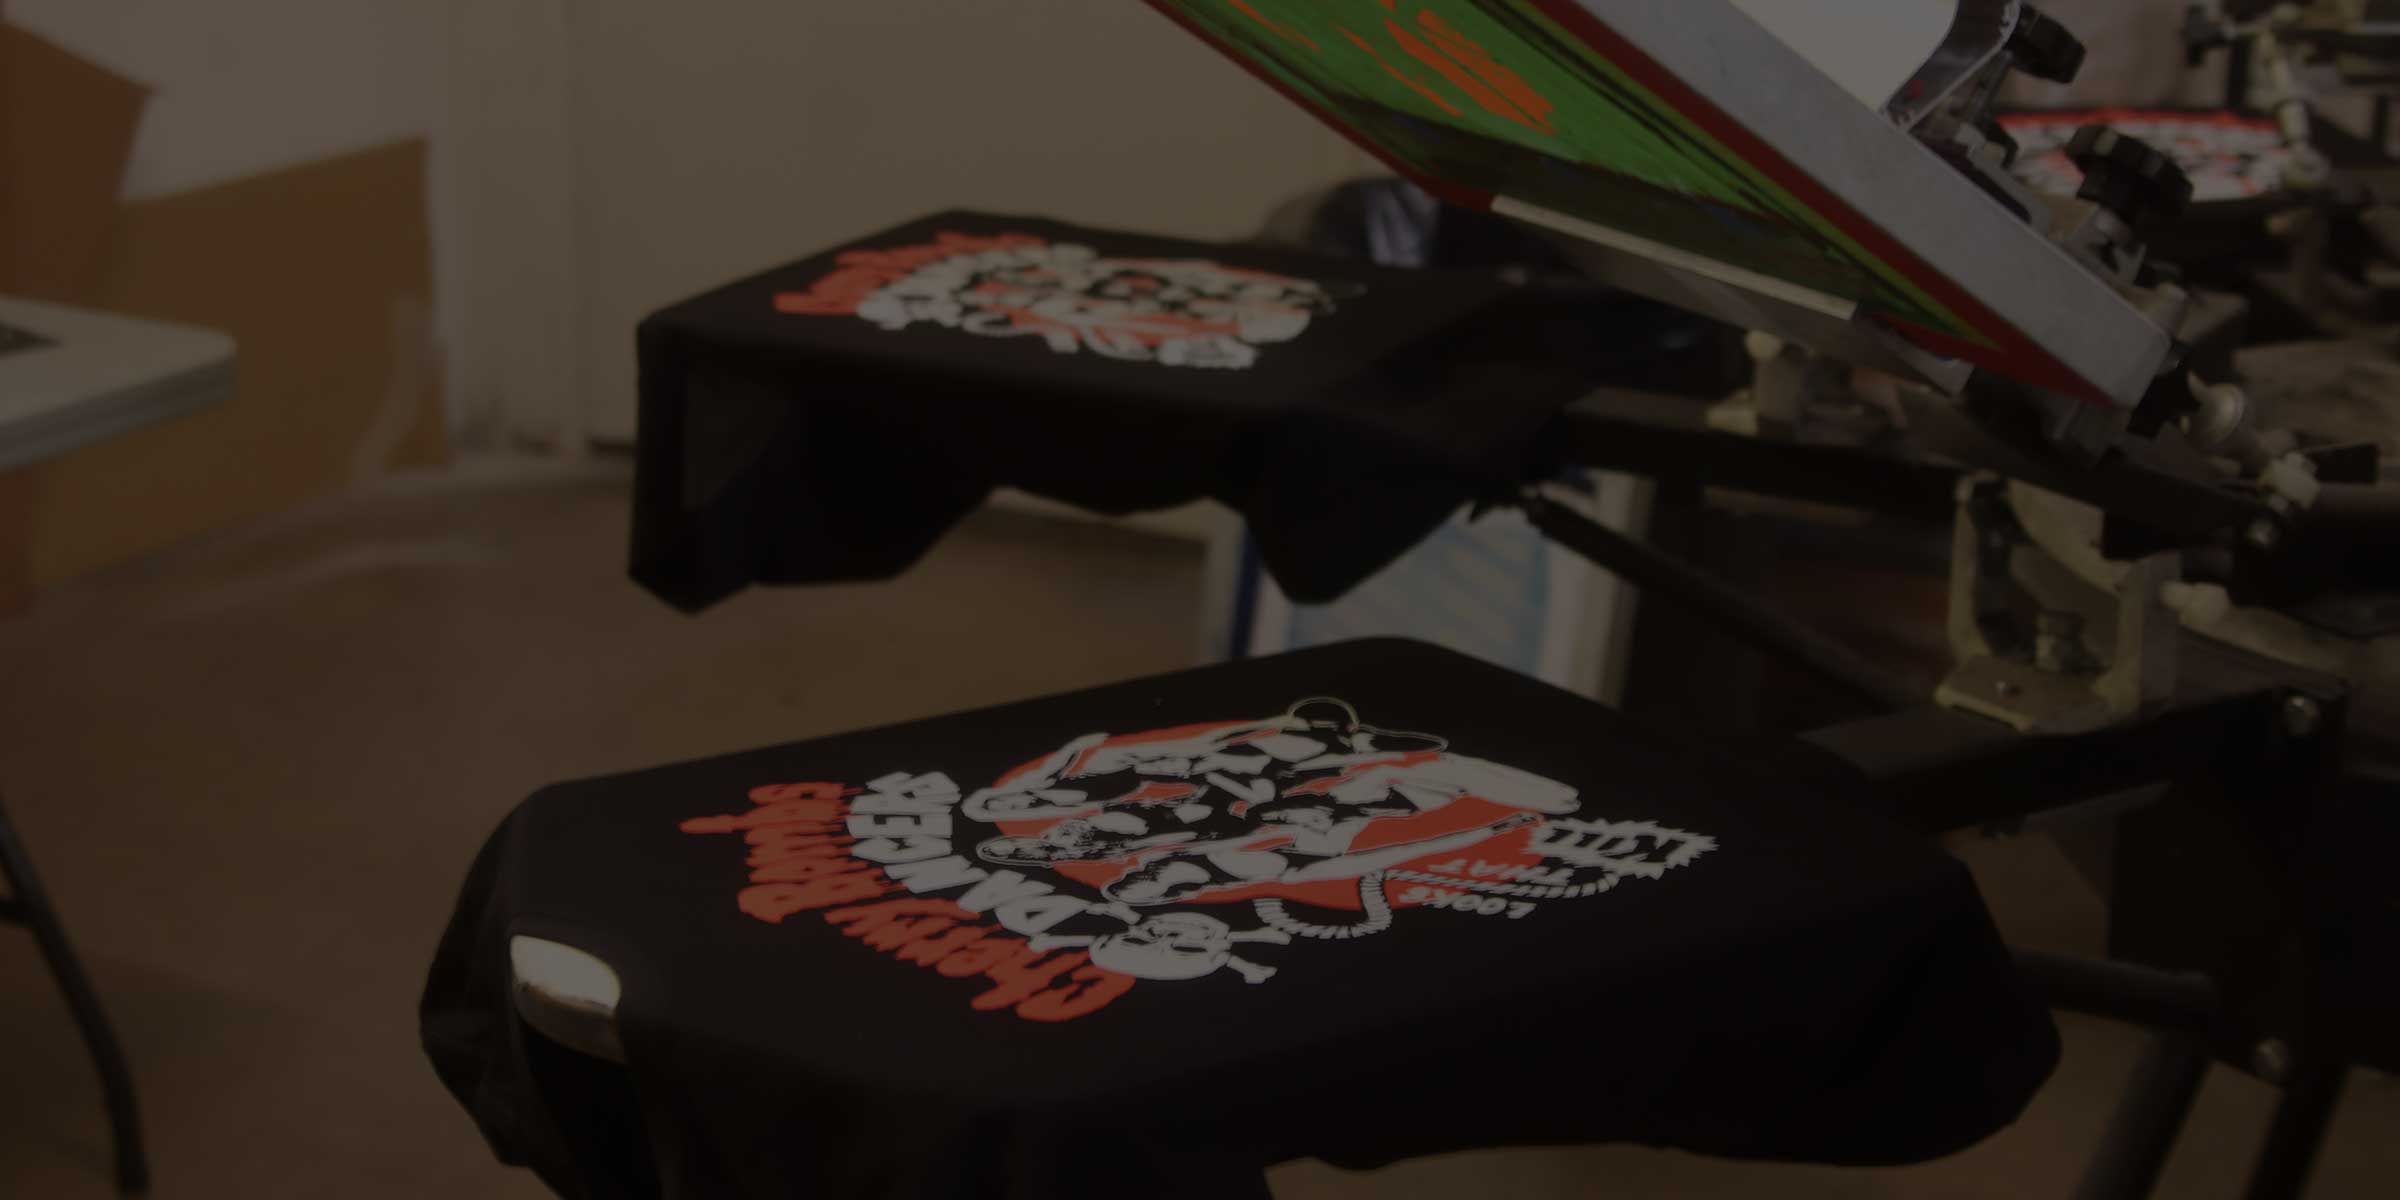 custom printed tee shirts for bands